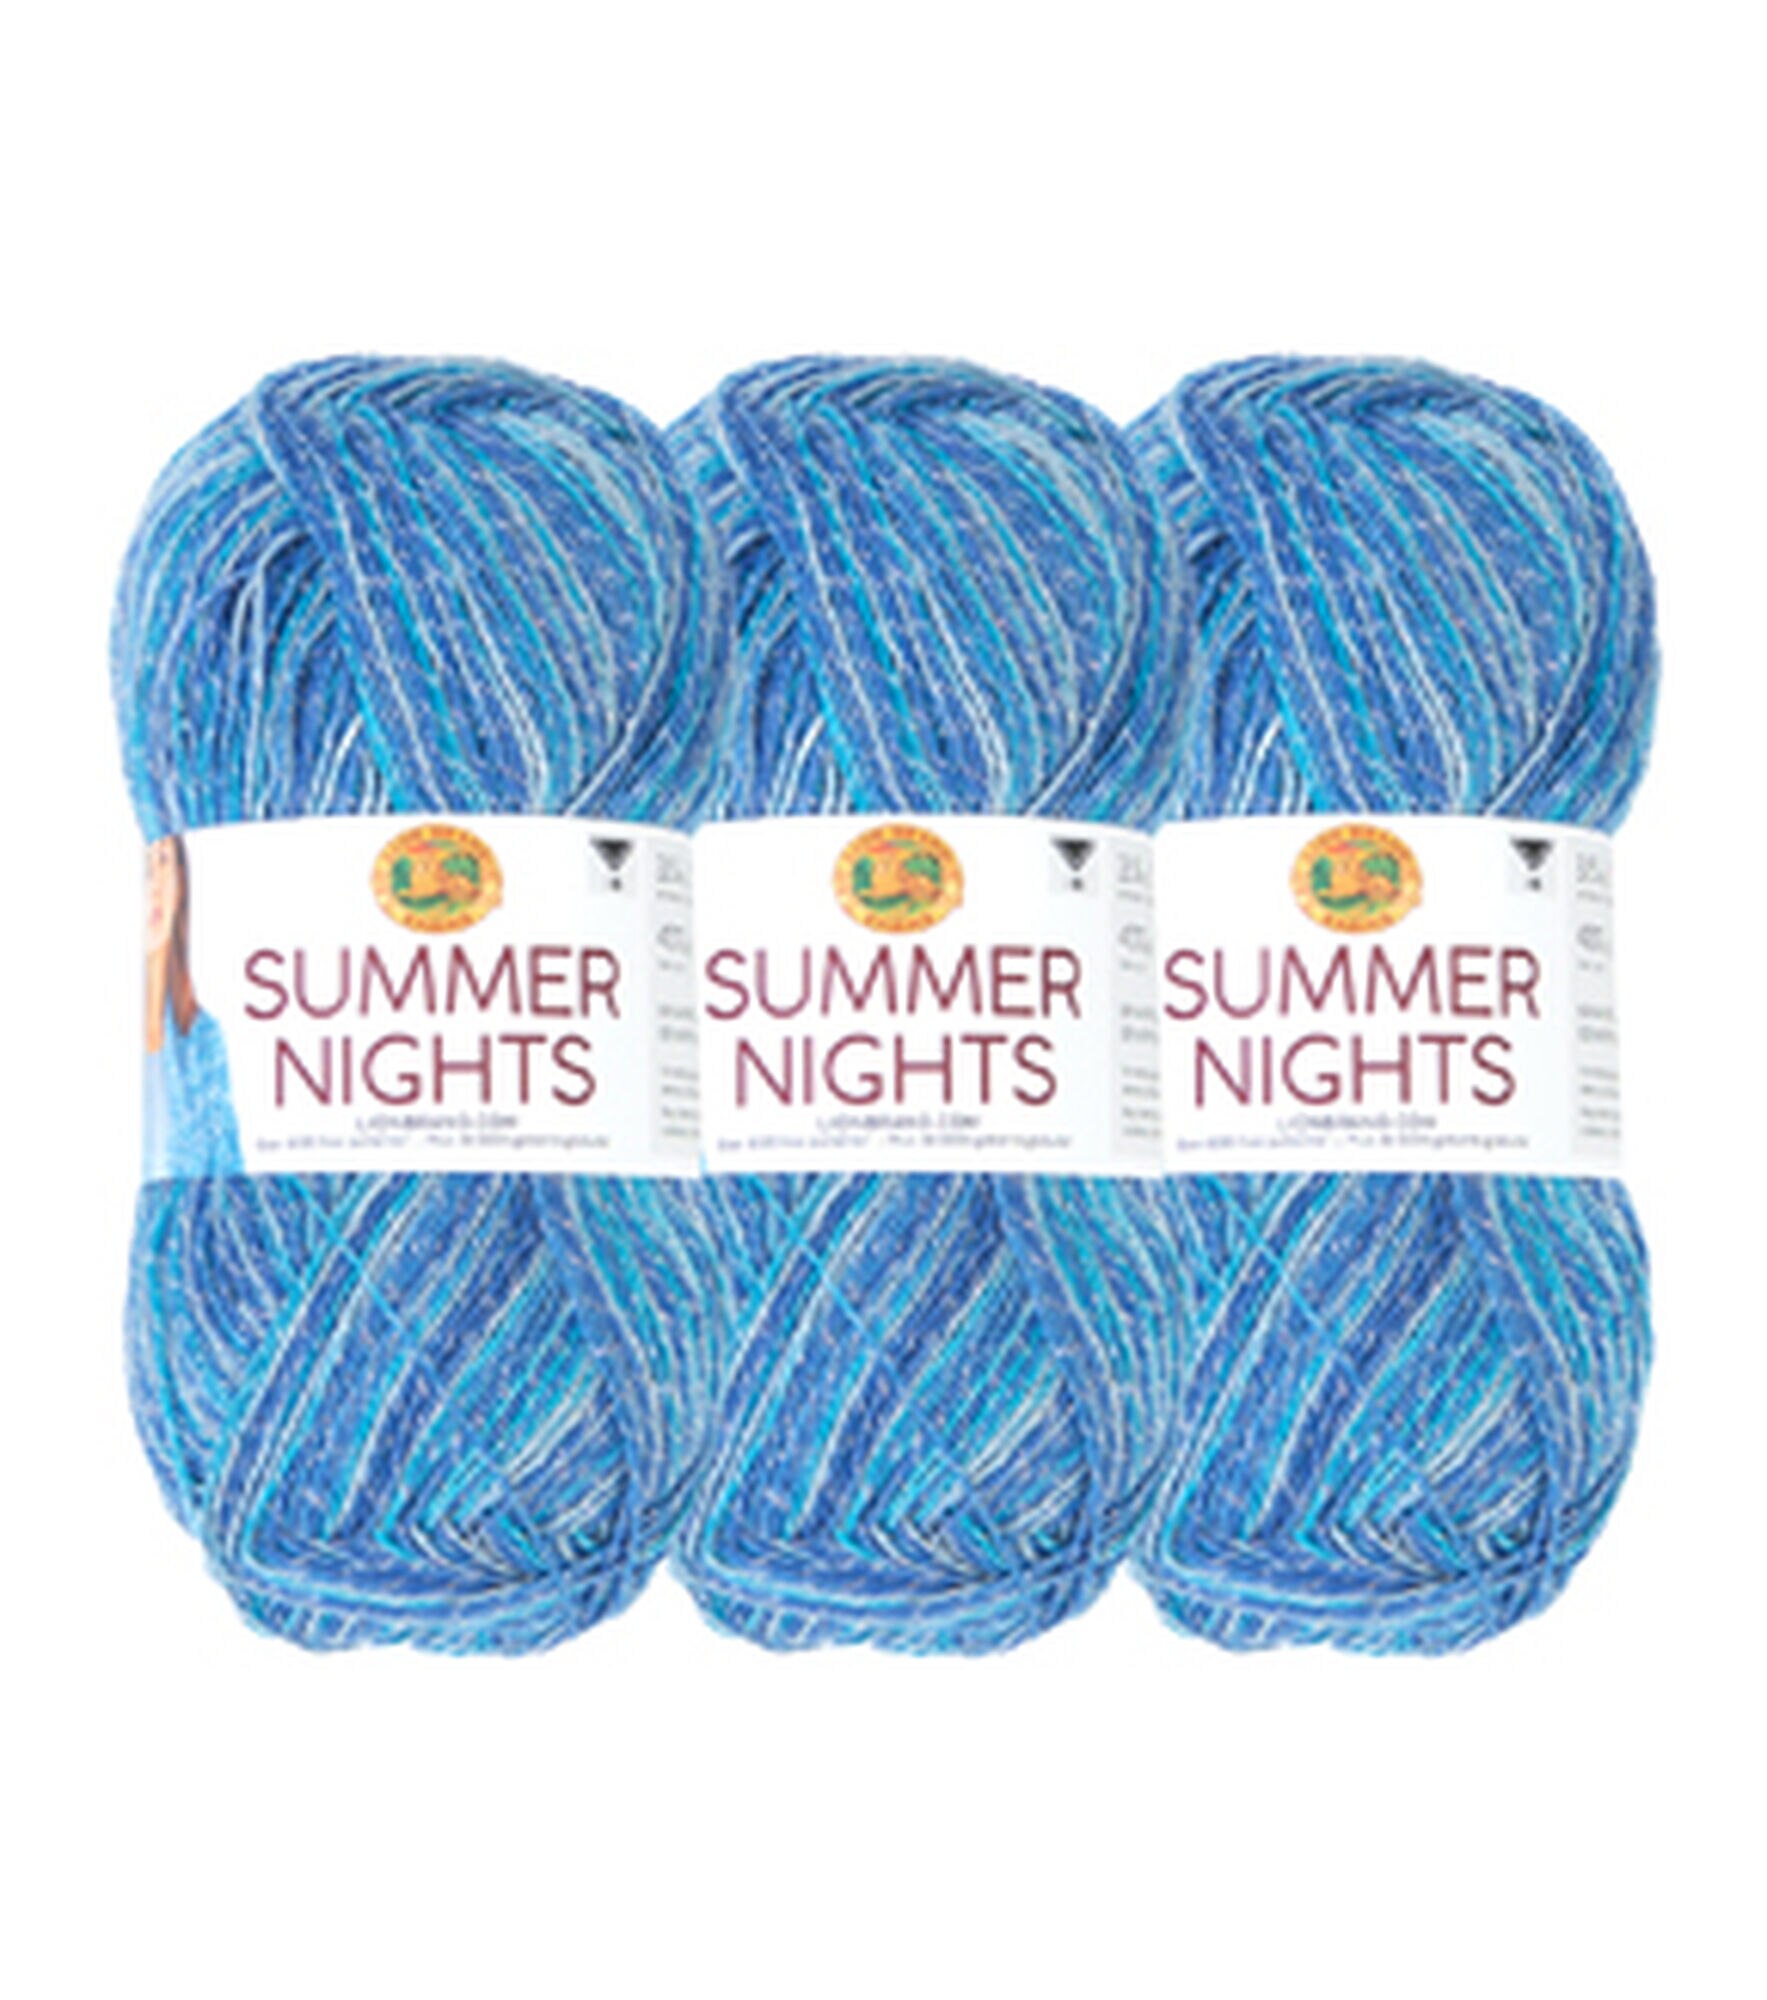  Lion Brand Yarn Summer Nights Bonus Bundle Yarn, Island Breeze  (1 skein/ball)